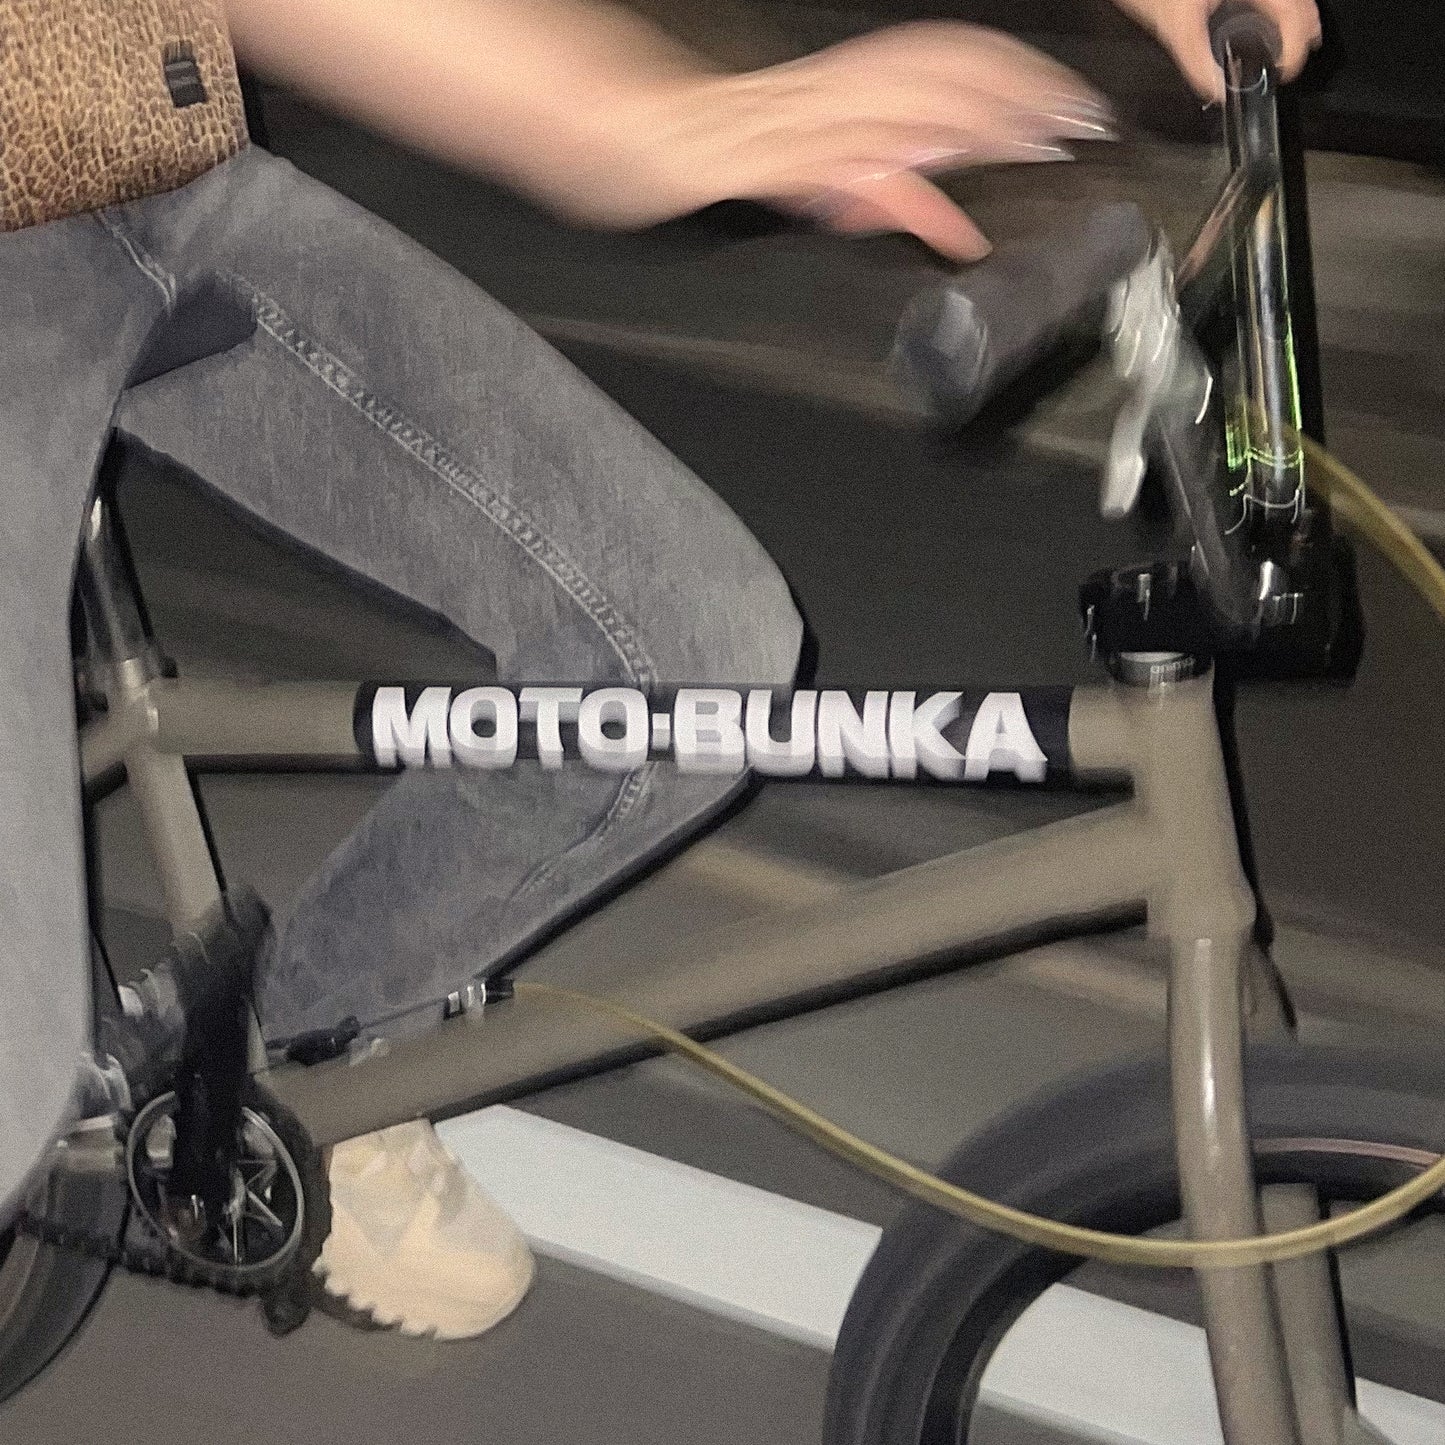 MOTO-BUNKA - Big Text Logo Sticker